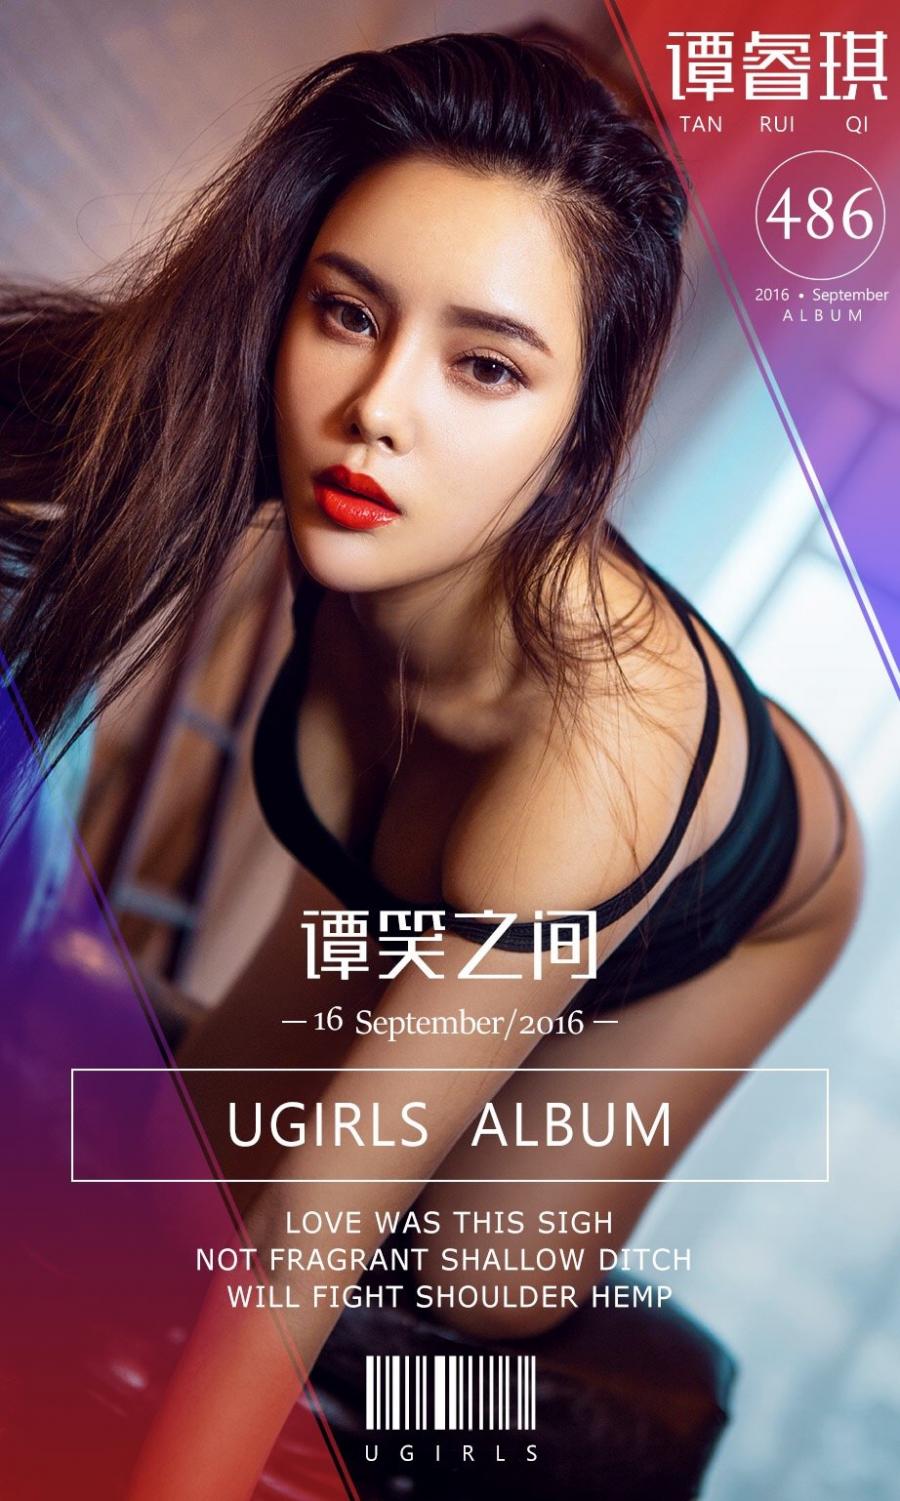 Ugirls App Vol. 486 Tan Rui Qi